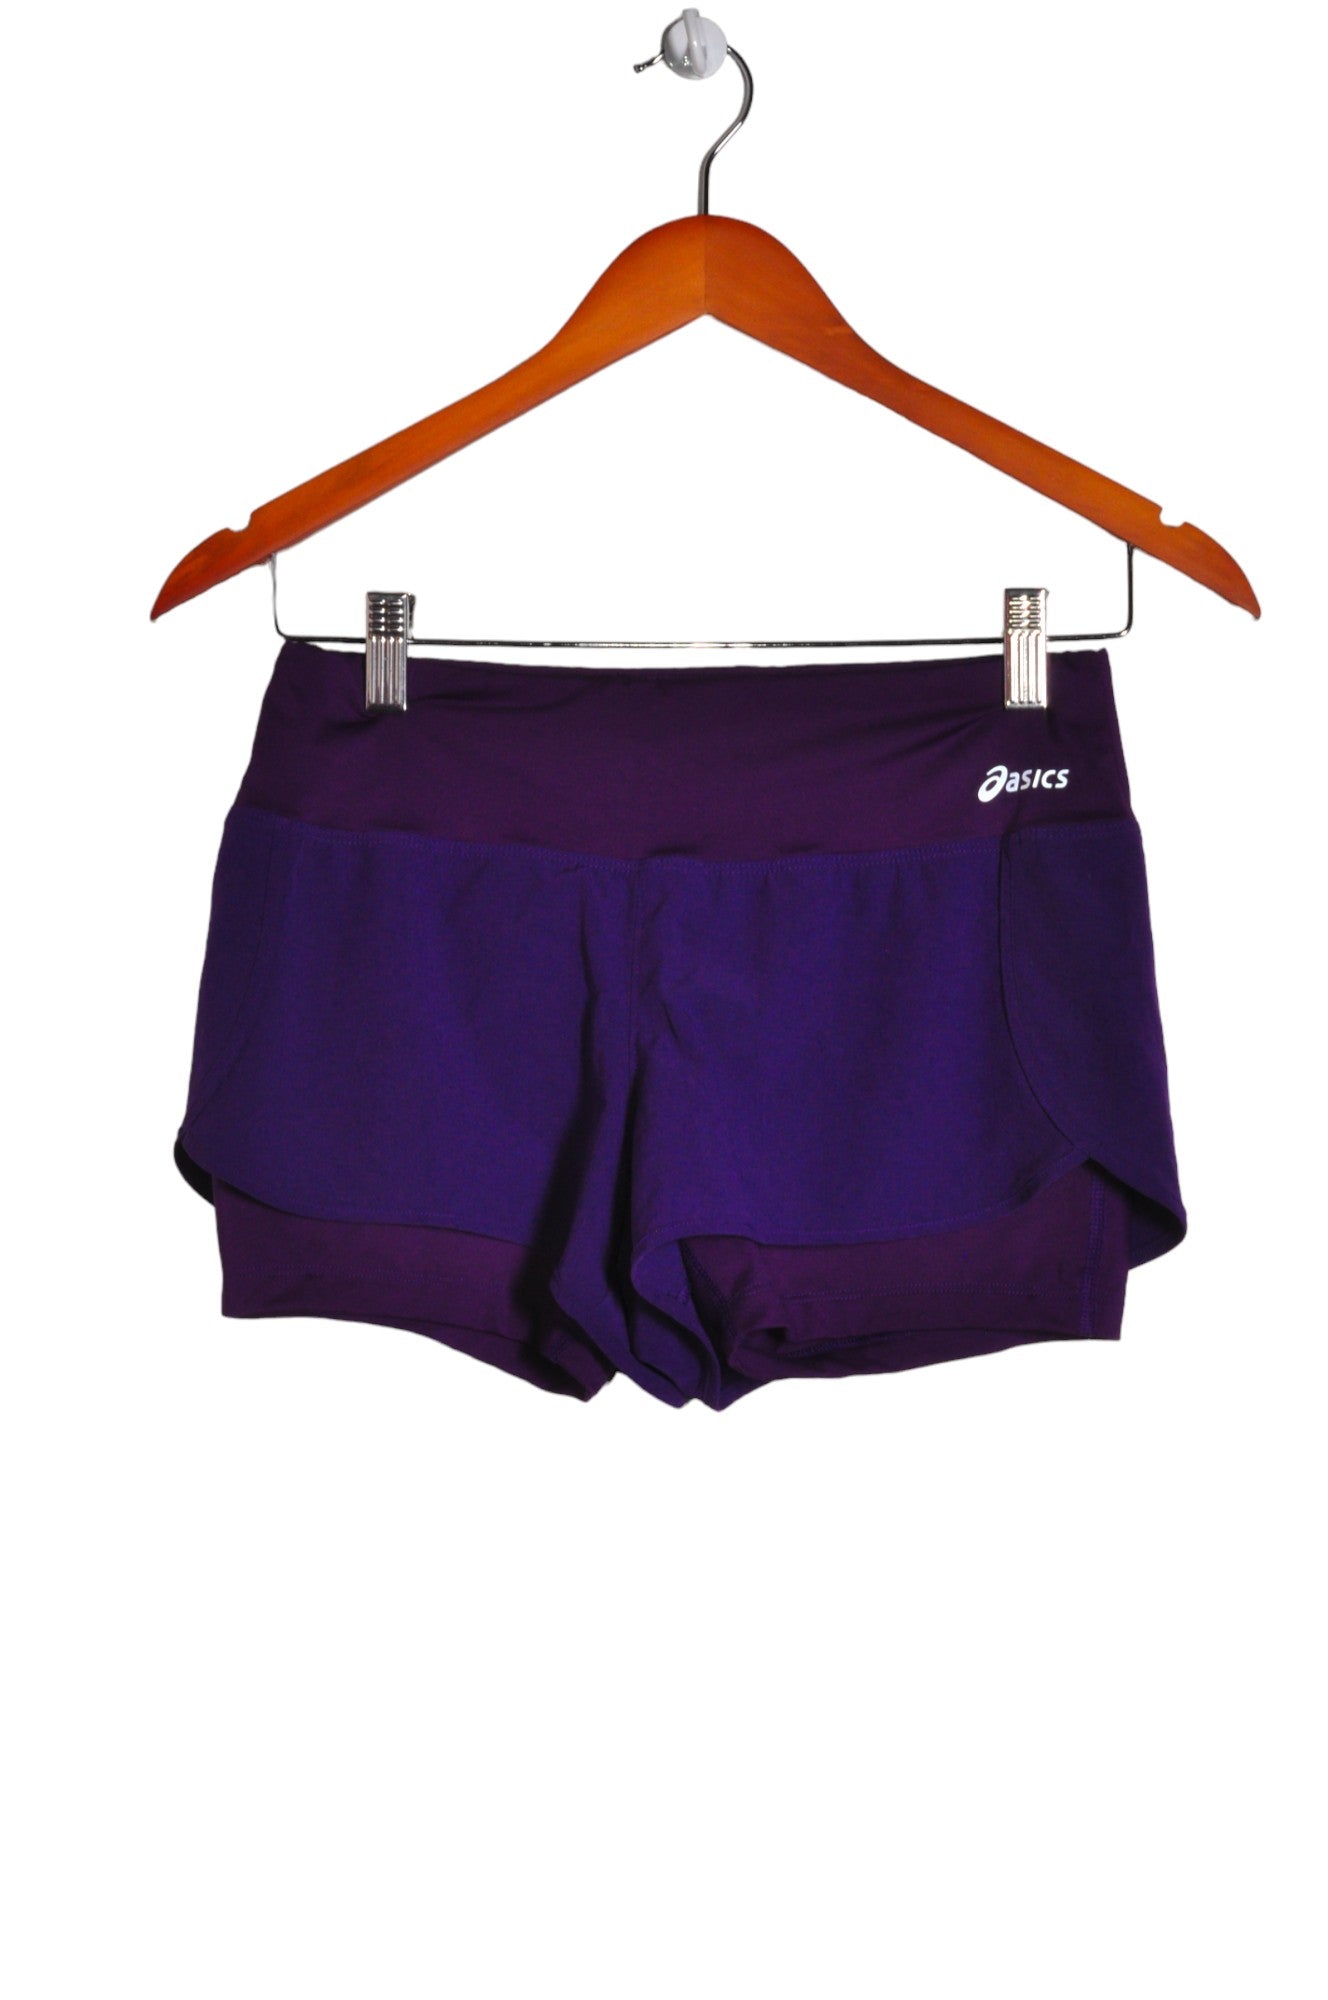 OASICS Women Activewear Shorts & Skirts Regular fit in Purple - Size S | 15 $ KOOP